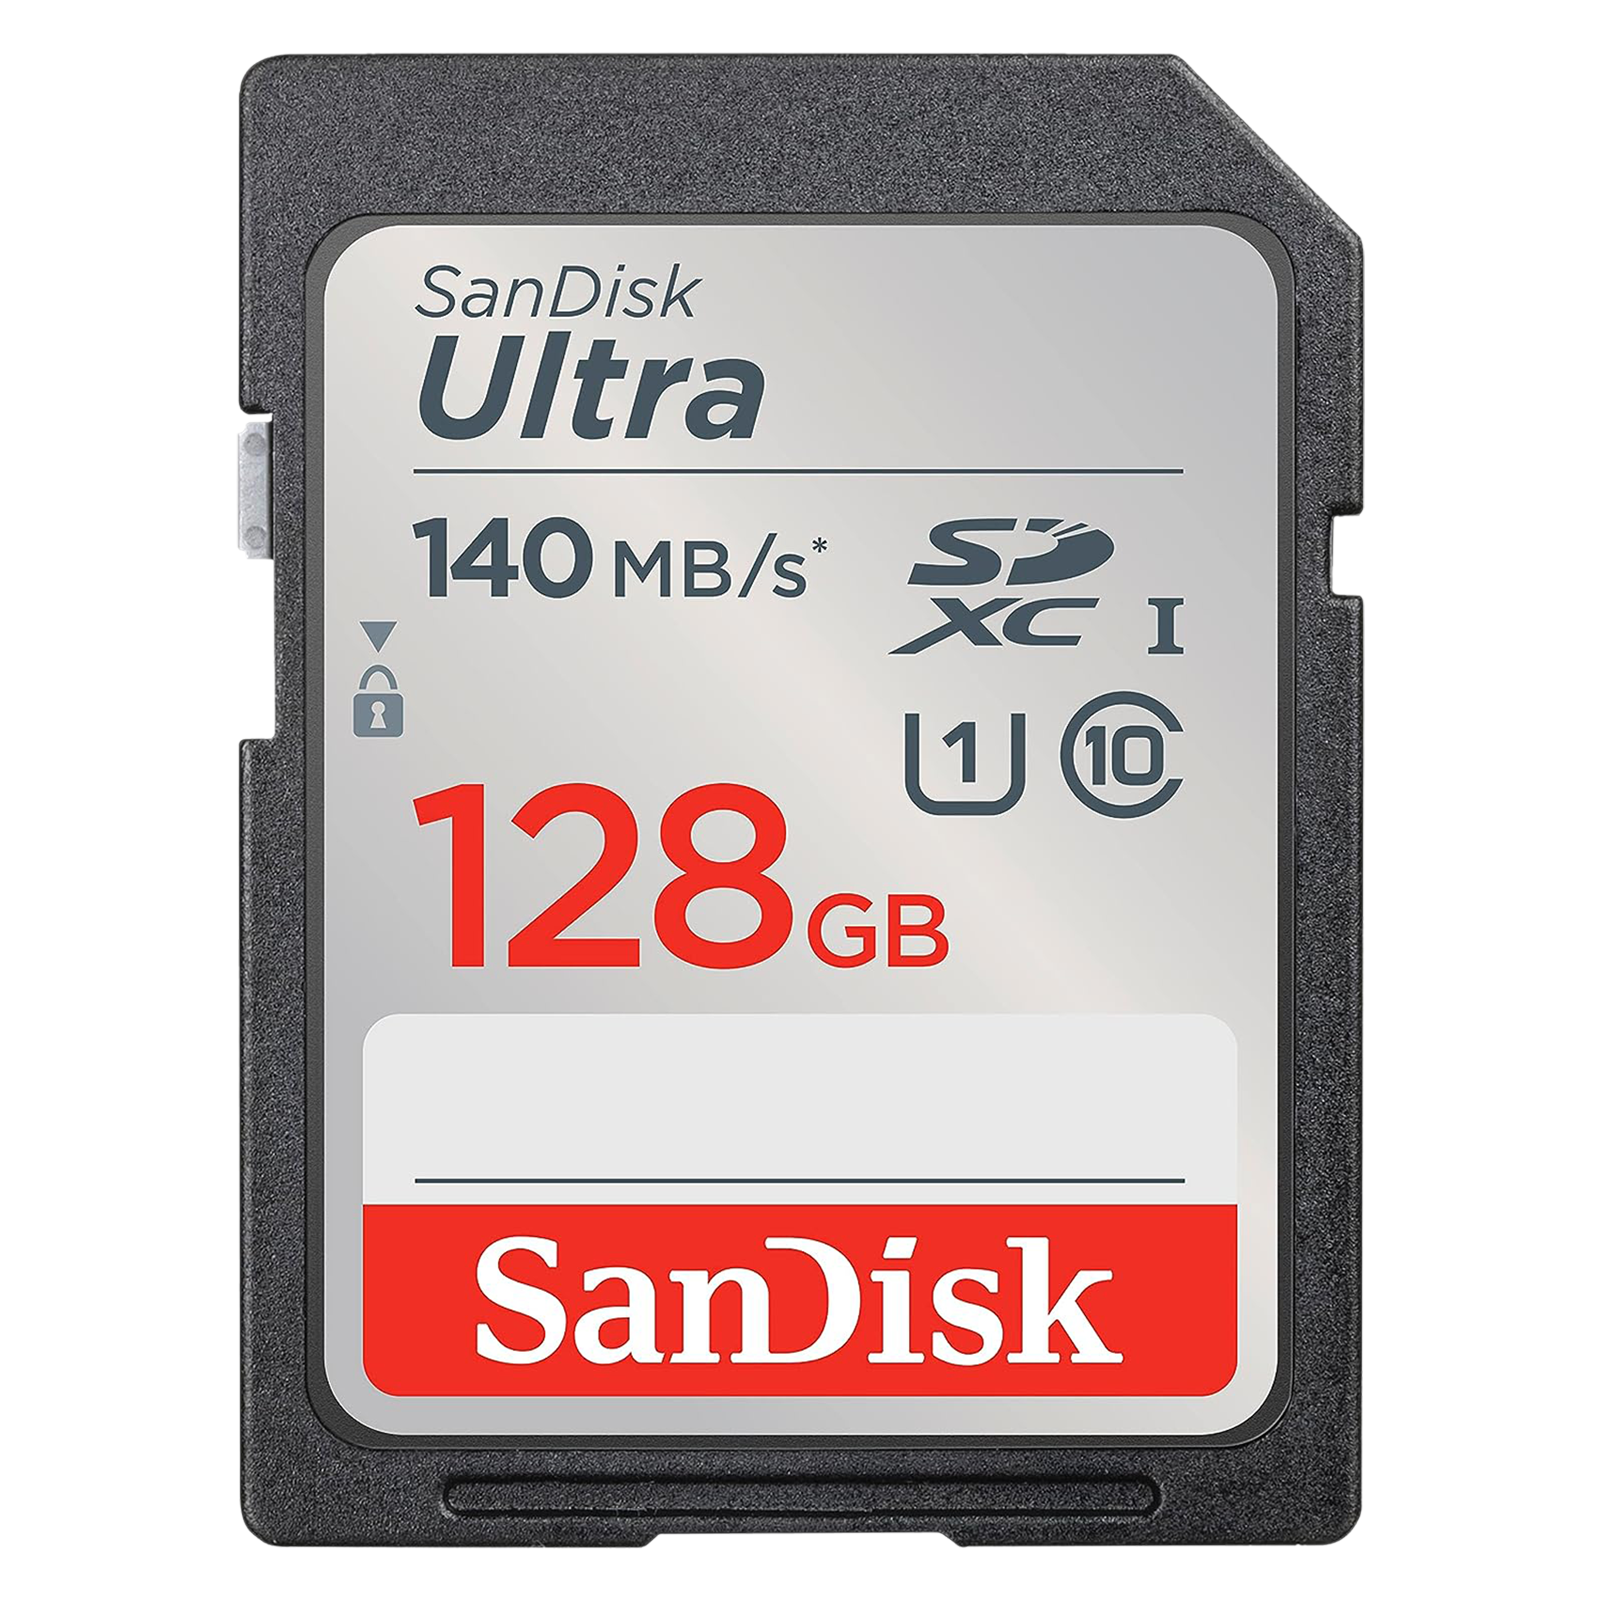 SanDisk Ultra SDXC 128GB Class 10 140MB/s Memory Card